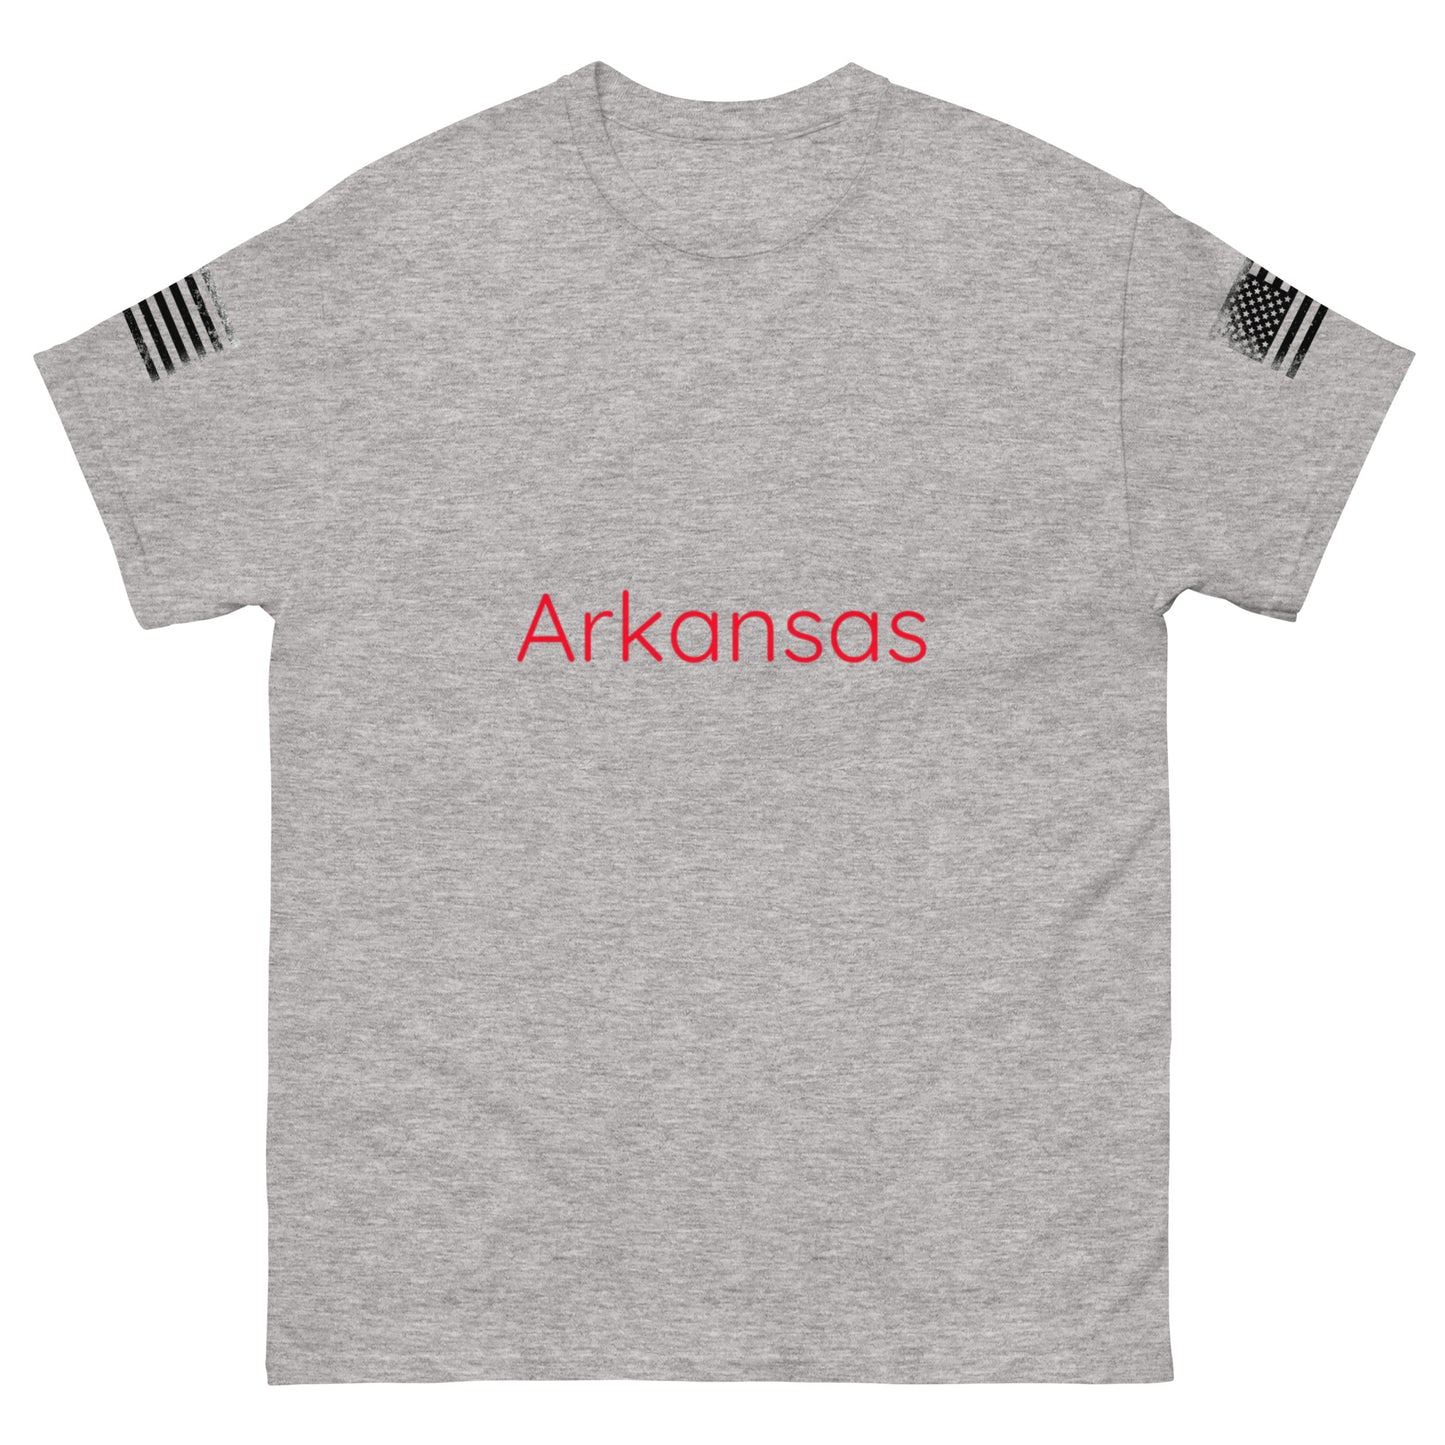 Arkansas Men's Tee I